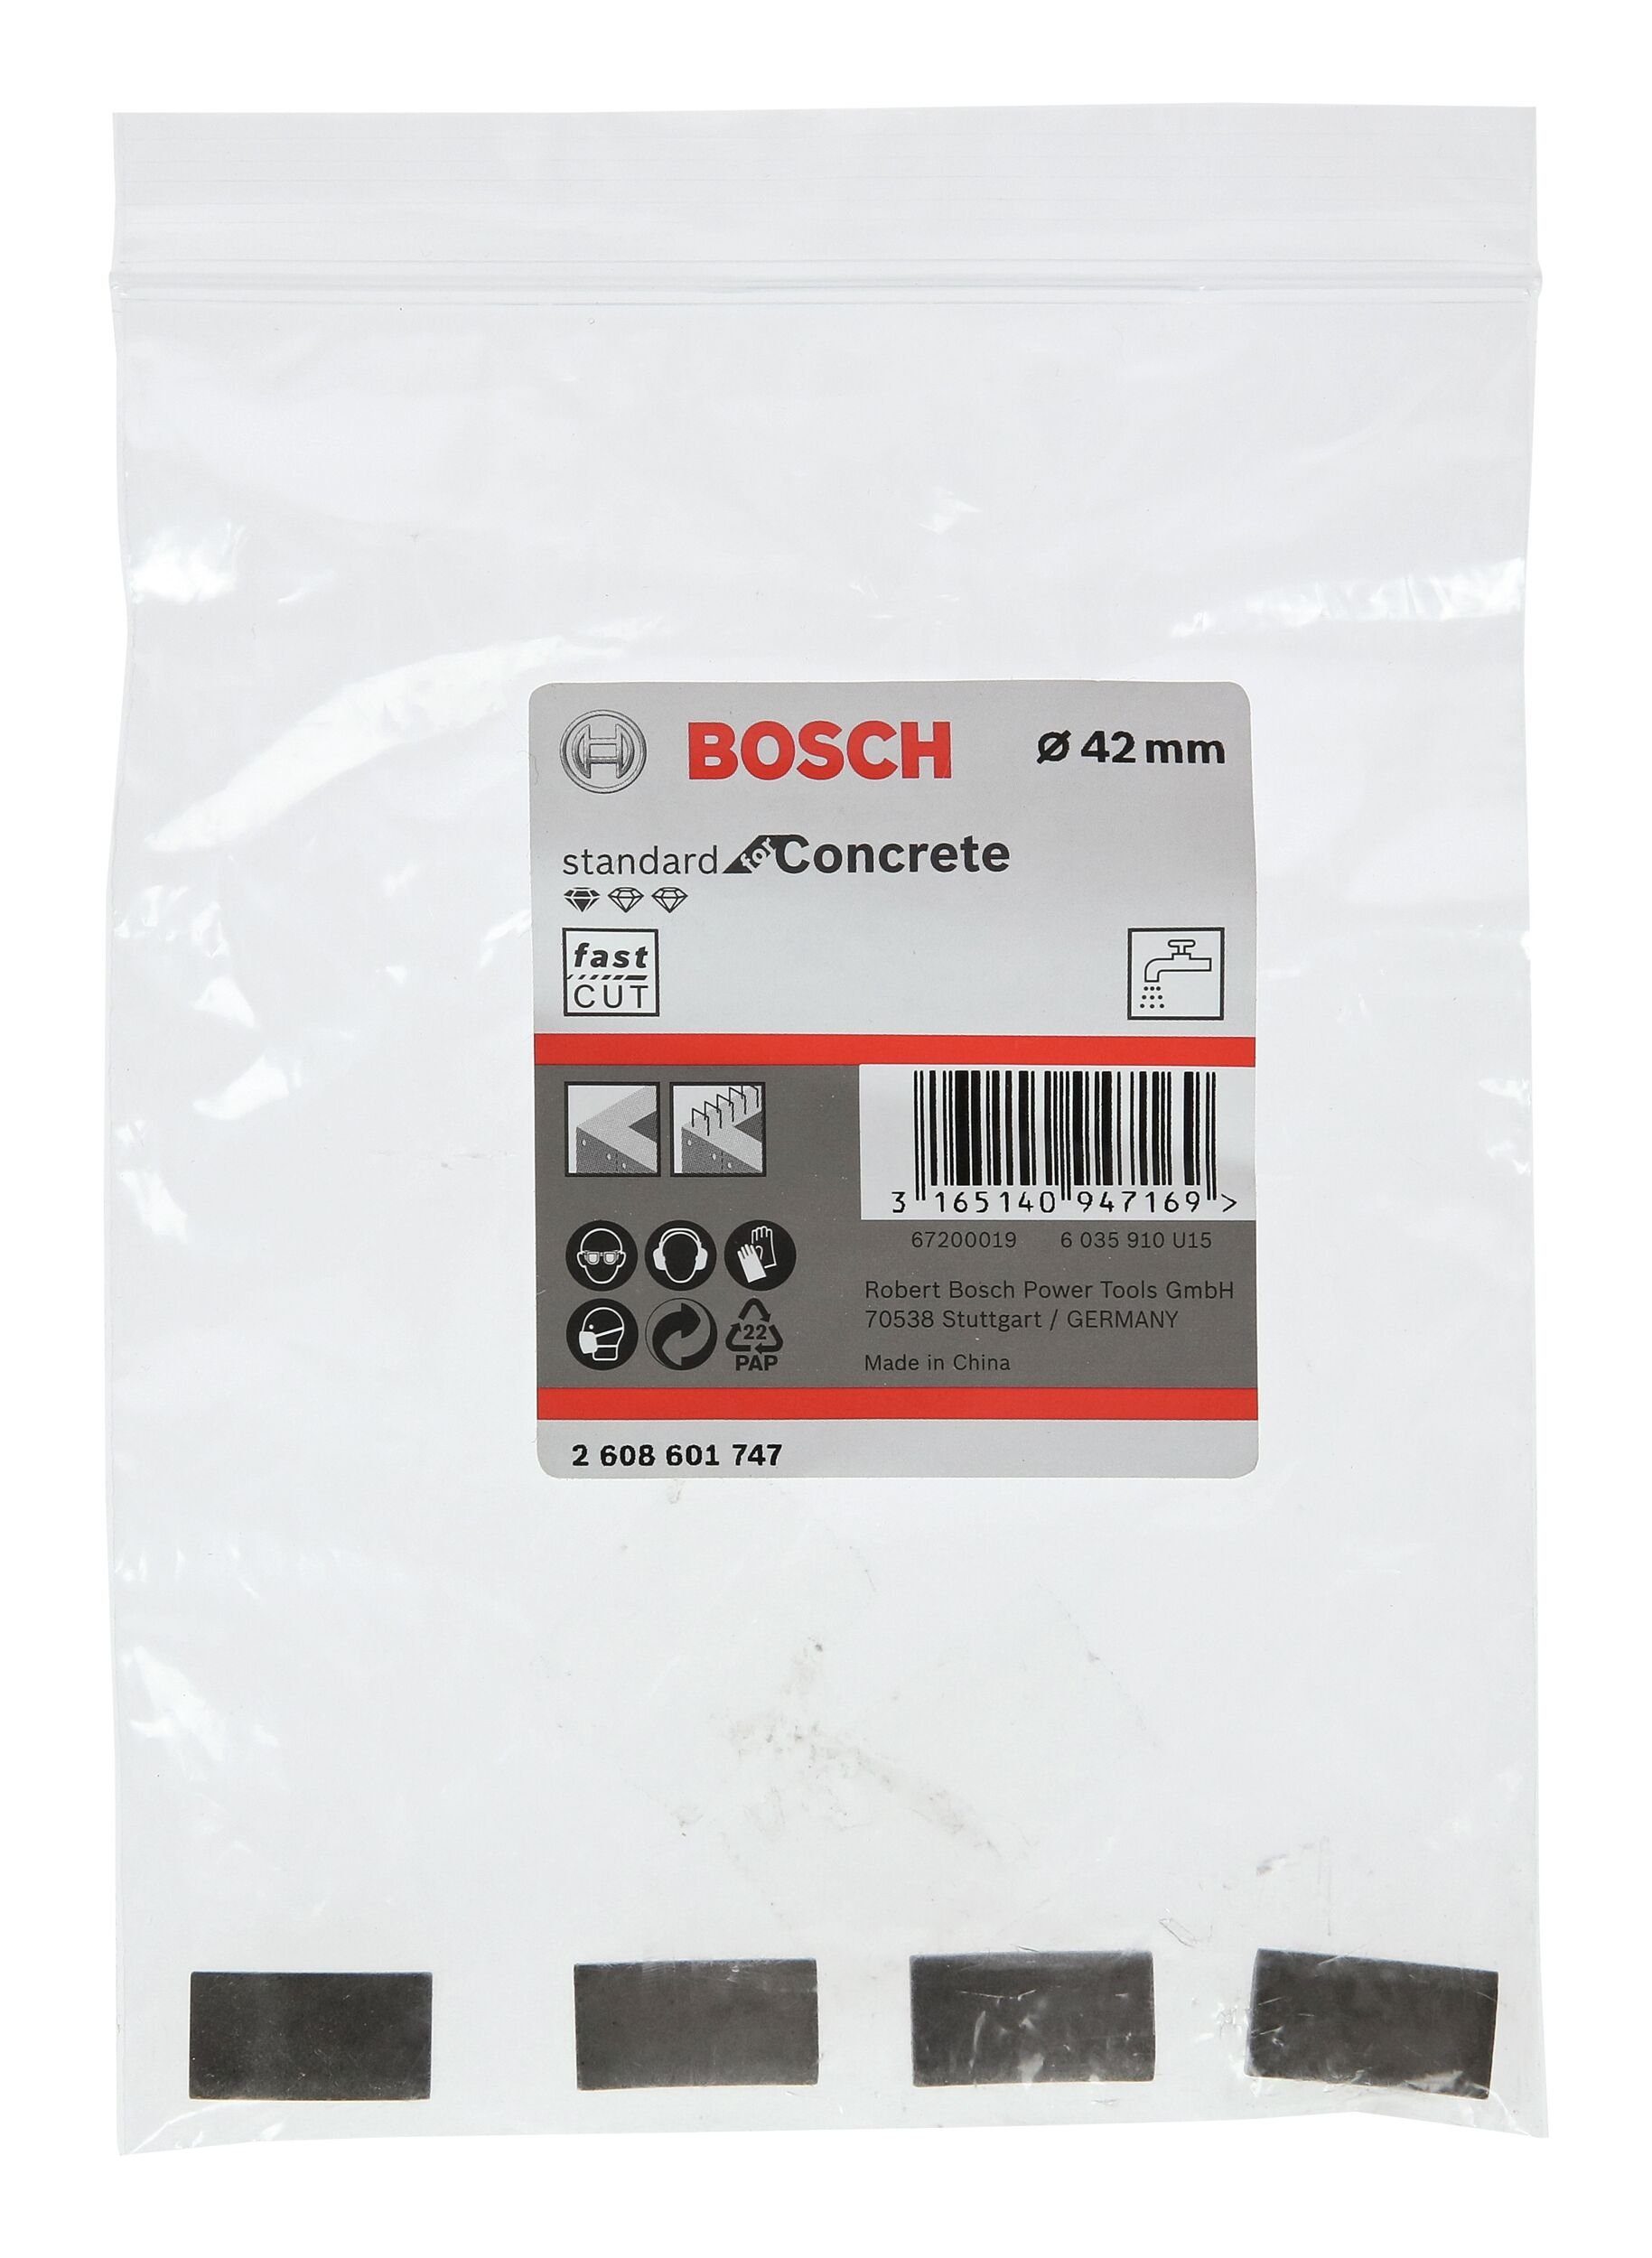 BOSCH Bohrkrone, Diamantbohrkrone 4 10 Segmente for Segmente Concrete mm für - Standard